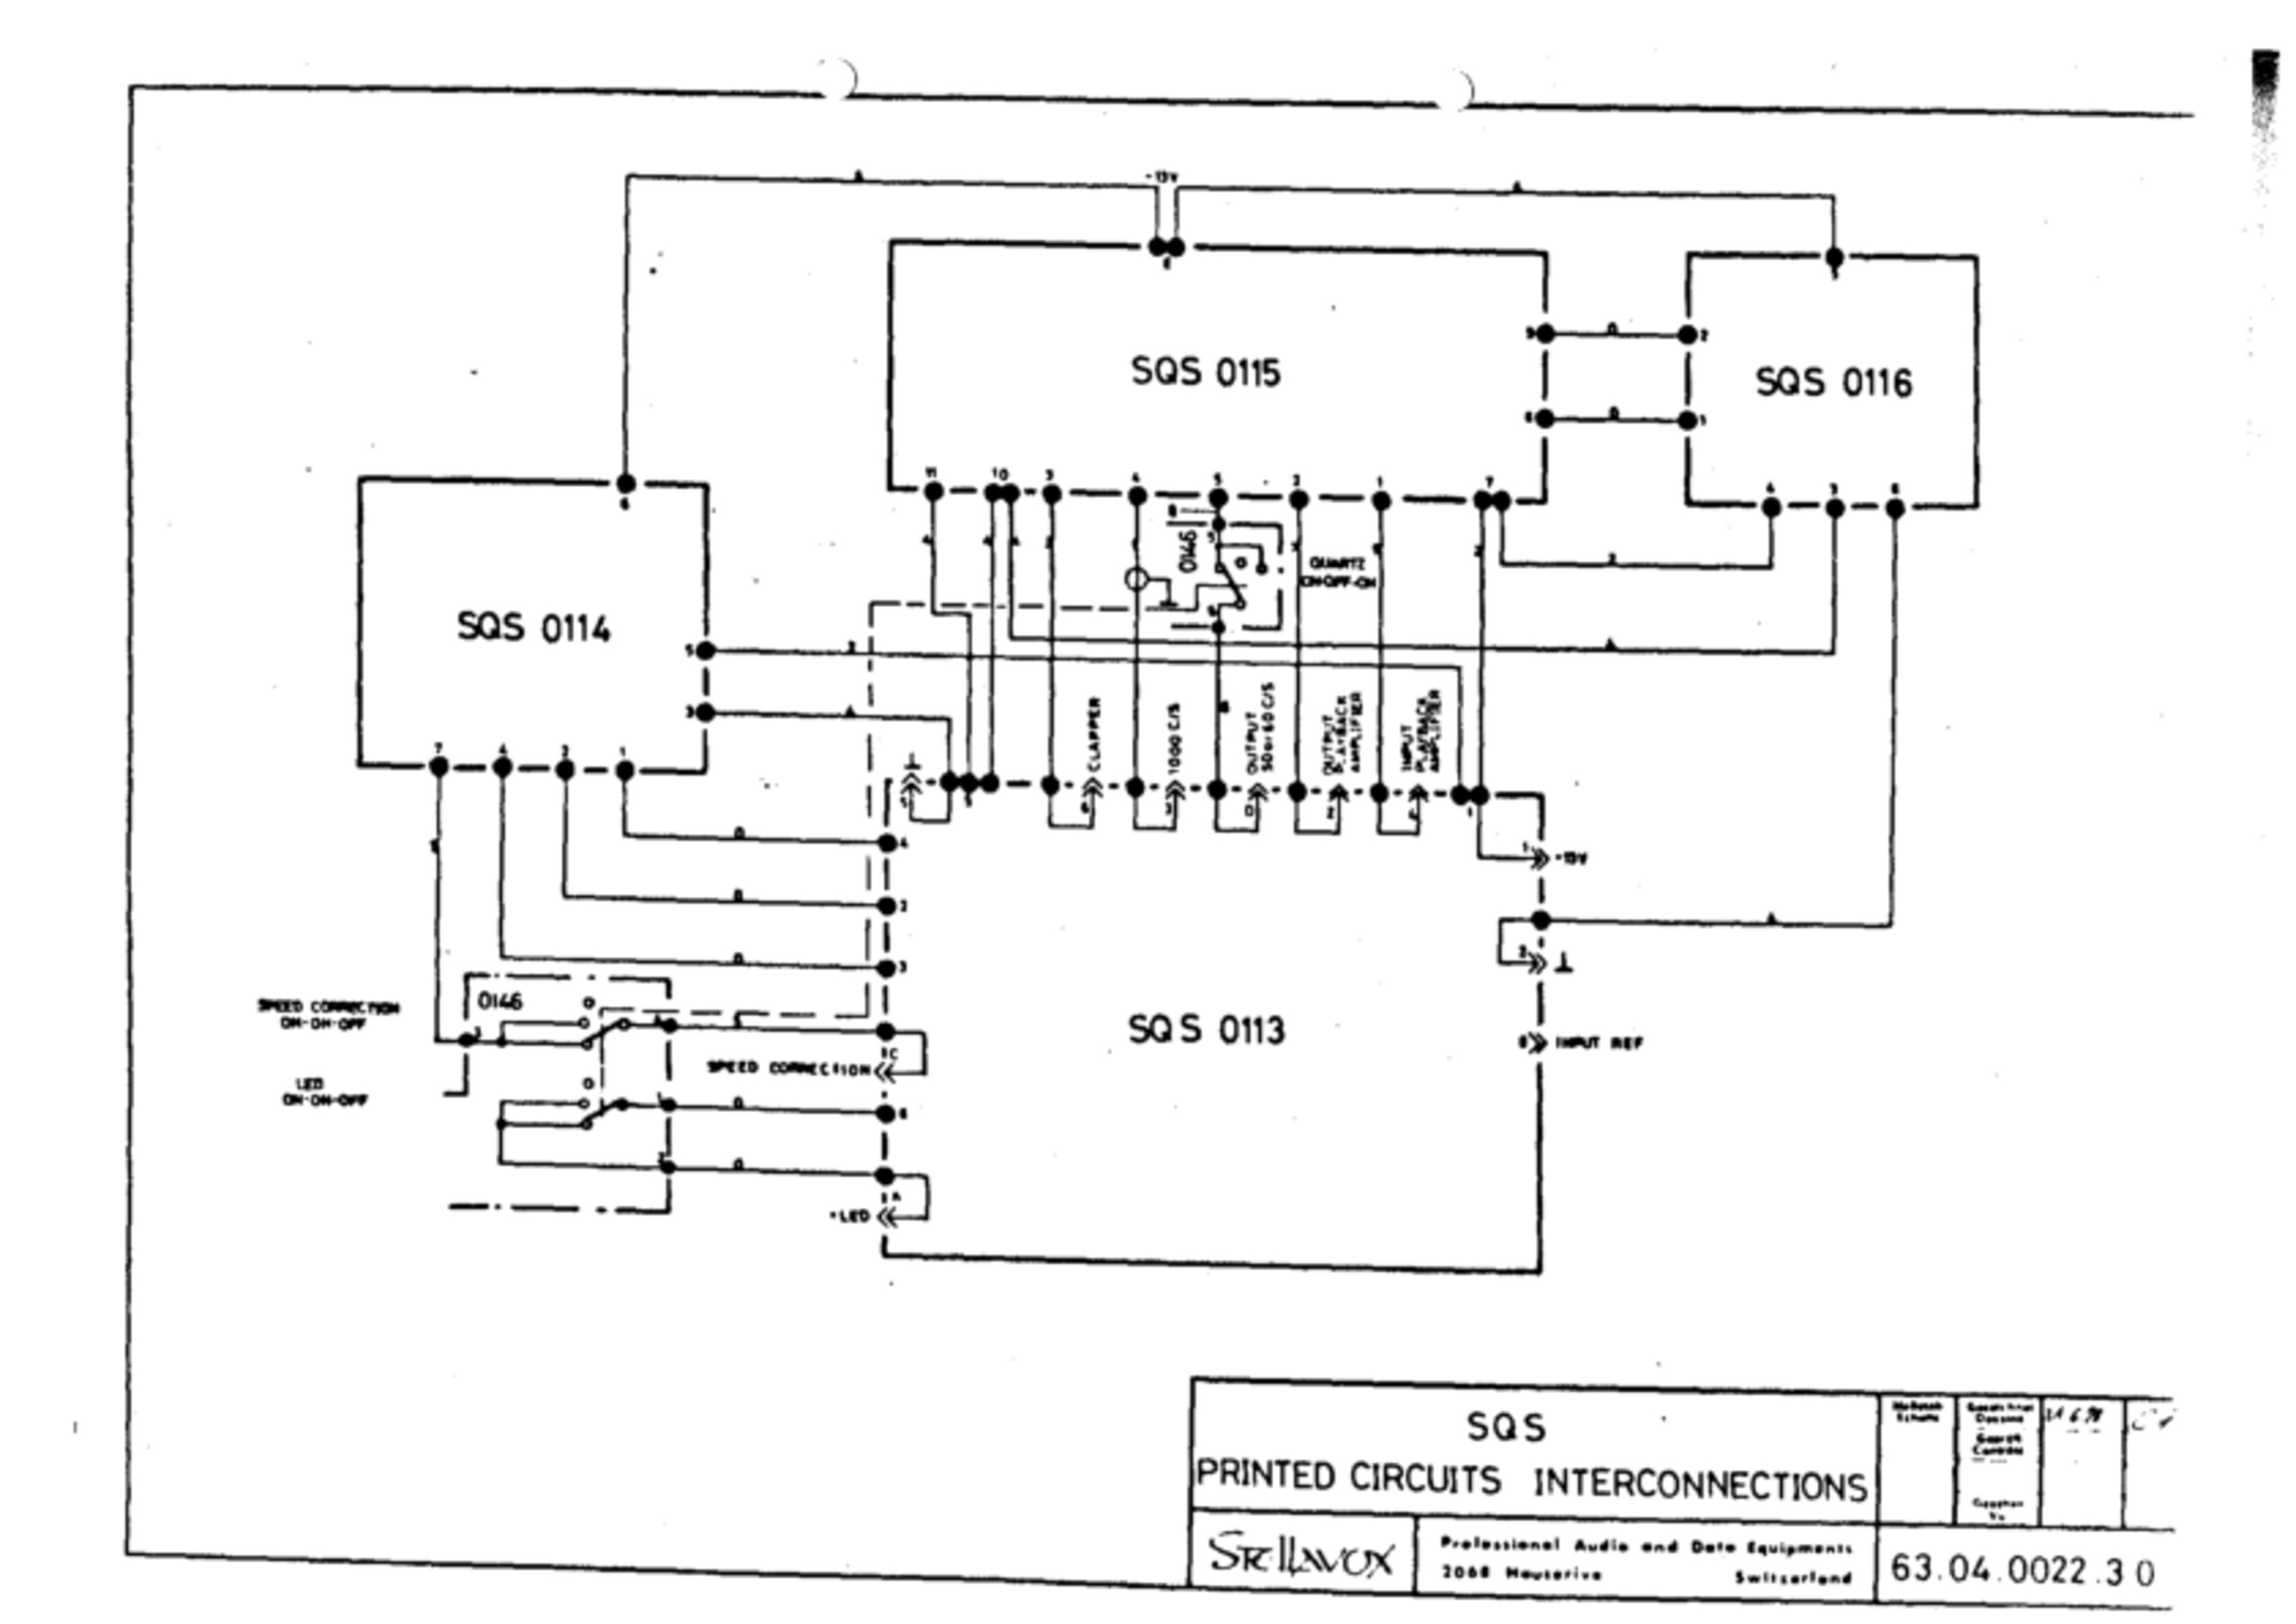 SQS printed circuits interconnections - No. 63.04.0022.3.0